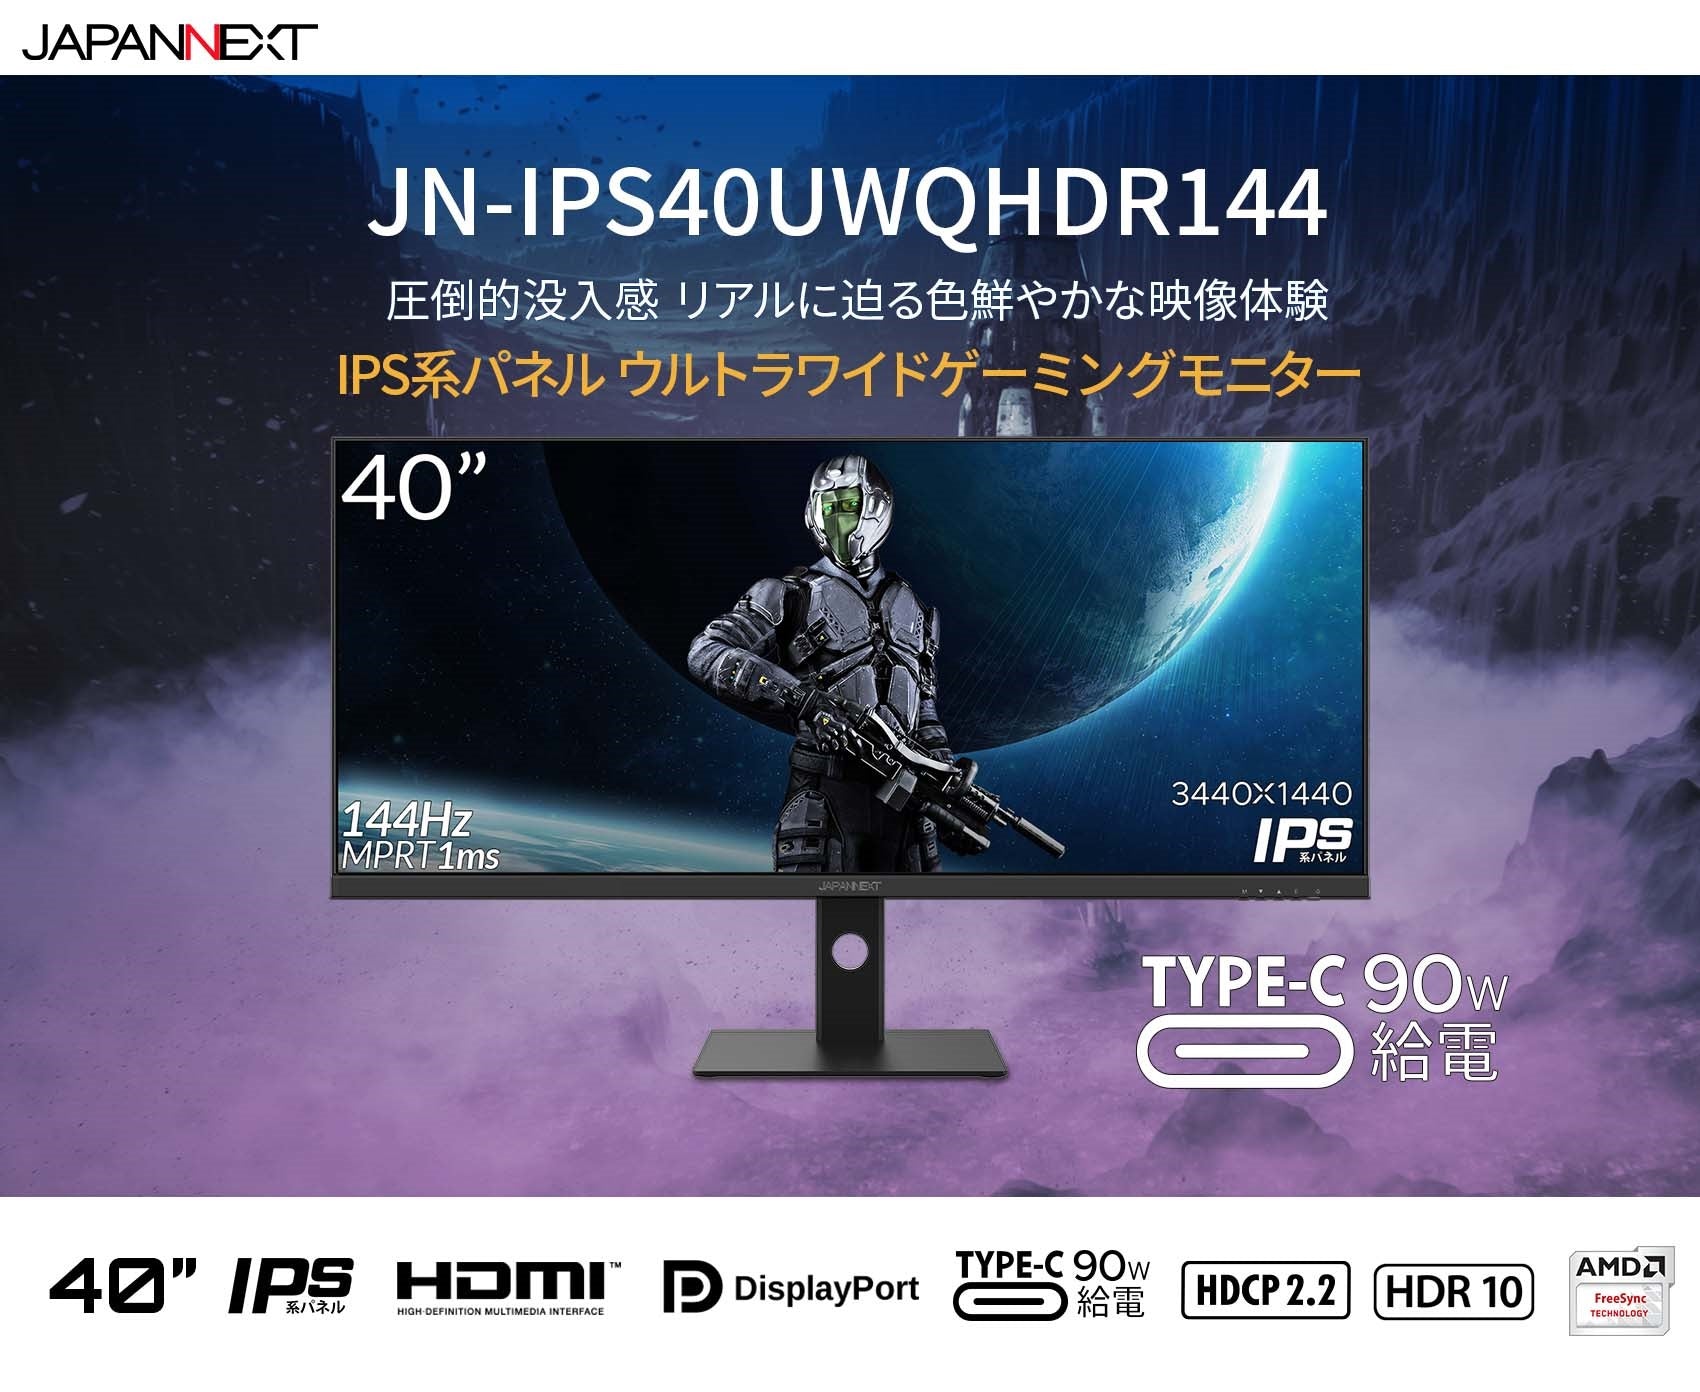 JN-IPS40UWQHDR144